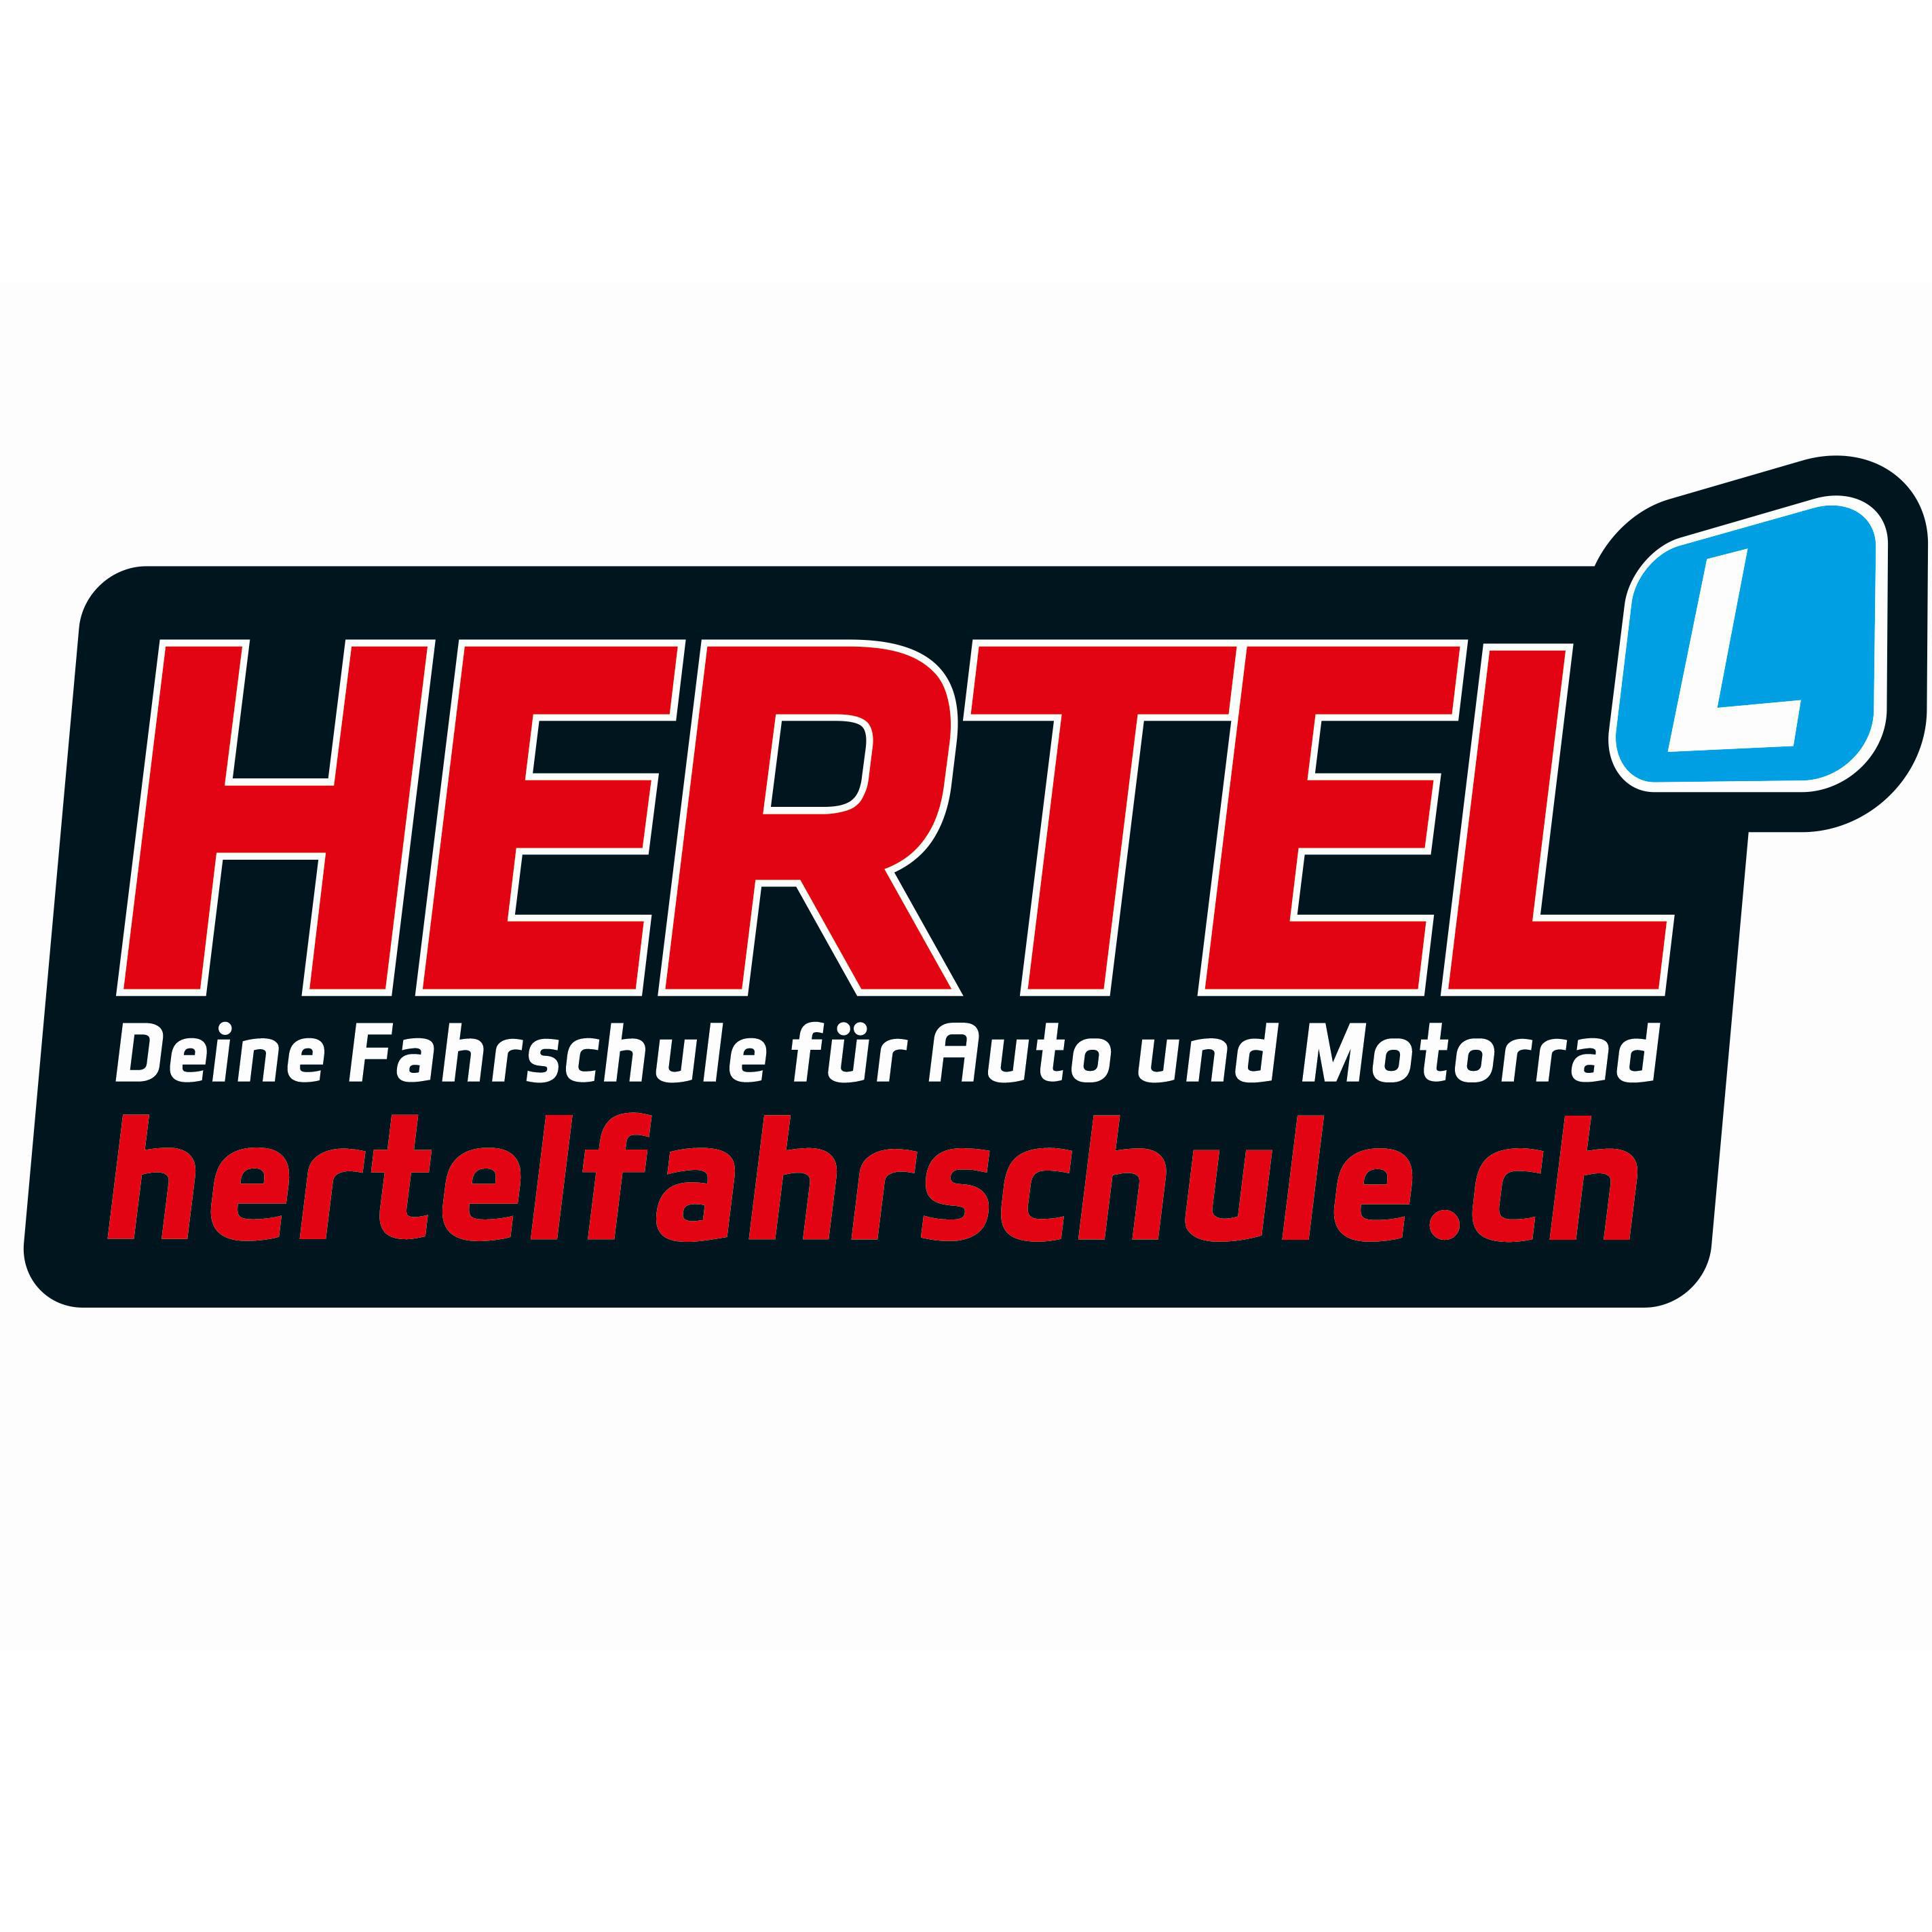 Hertel Fahrschule GmbH Logo